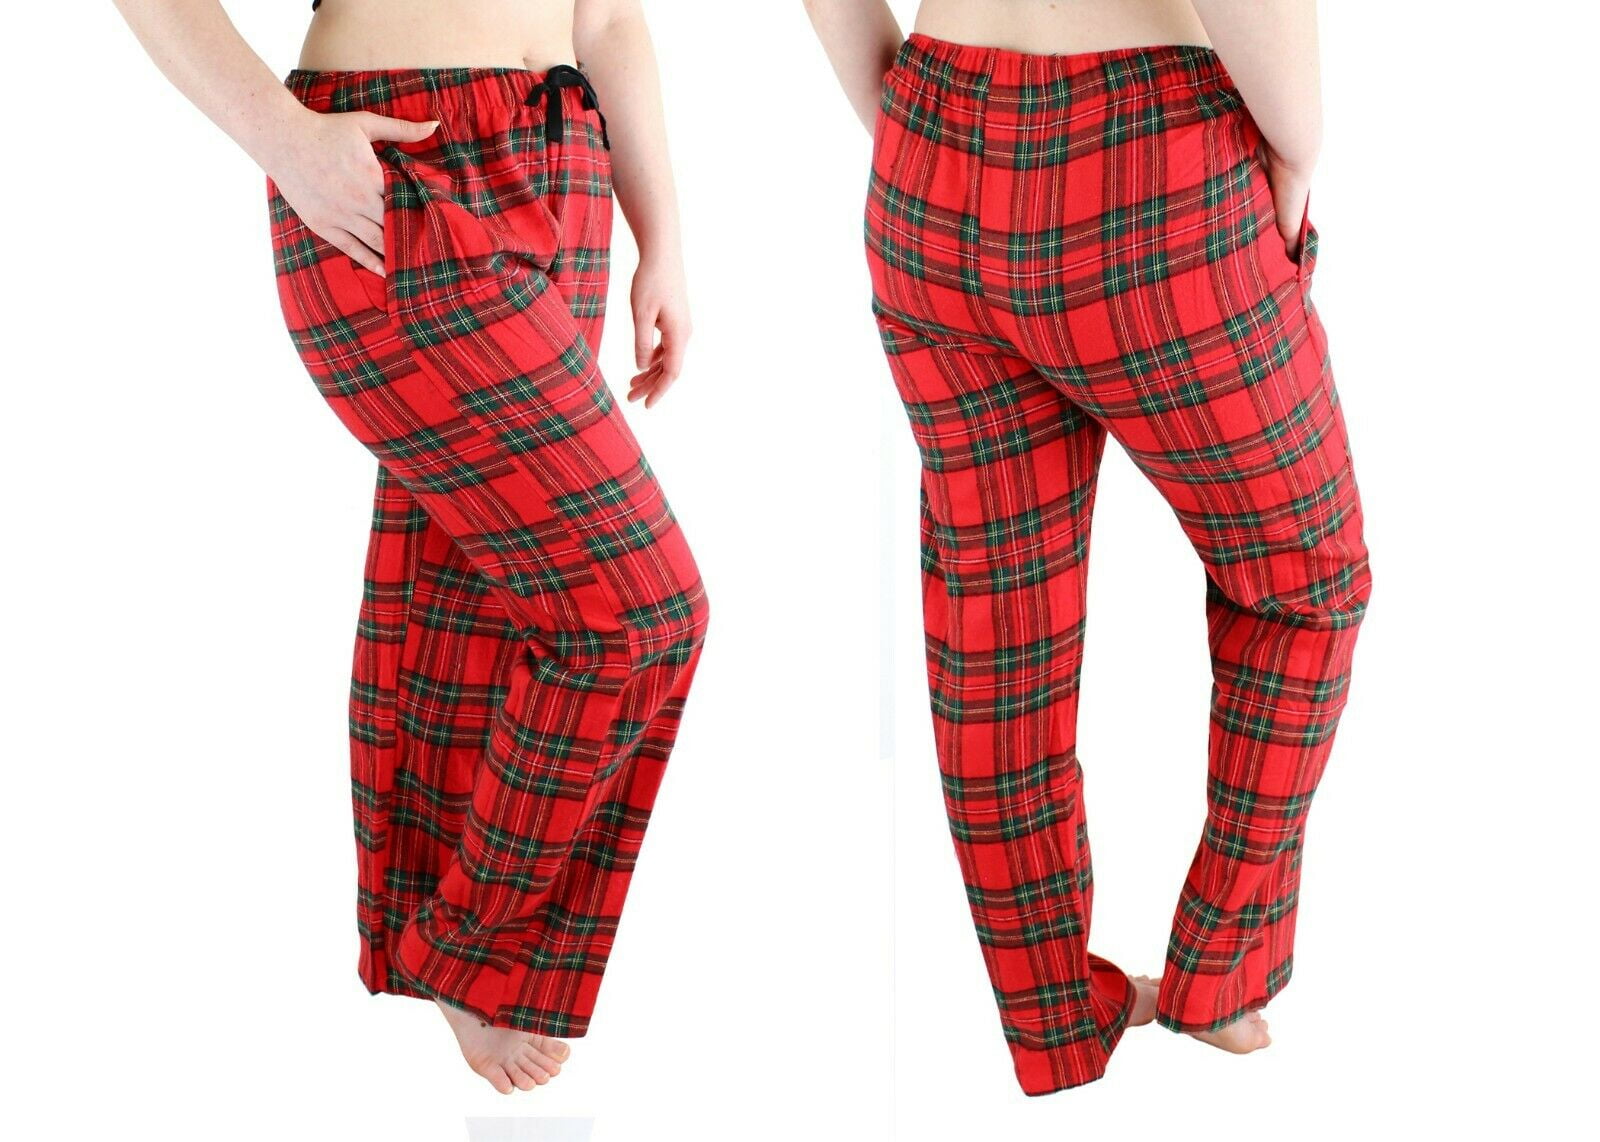 Women Lounge Pants Comfy Pajama Bottom with Pockets Stretch Classic Plaid  Sleepwear Drawstring Elastic Waist Pj Bottoms Pants,Soft Full Length  Sleepwear Long pj Pants,XS-XL Pink 